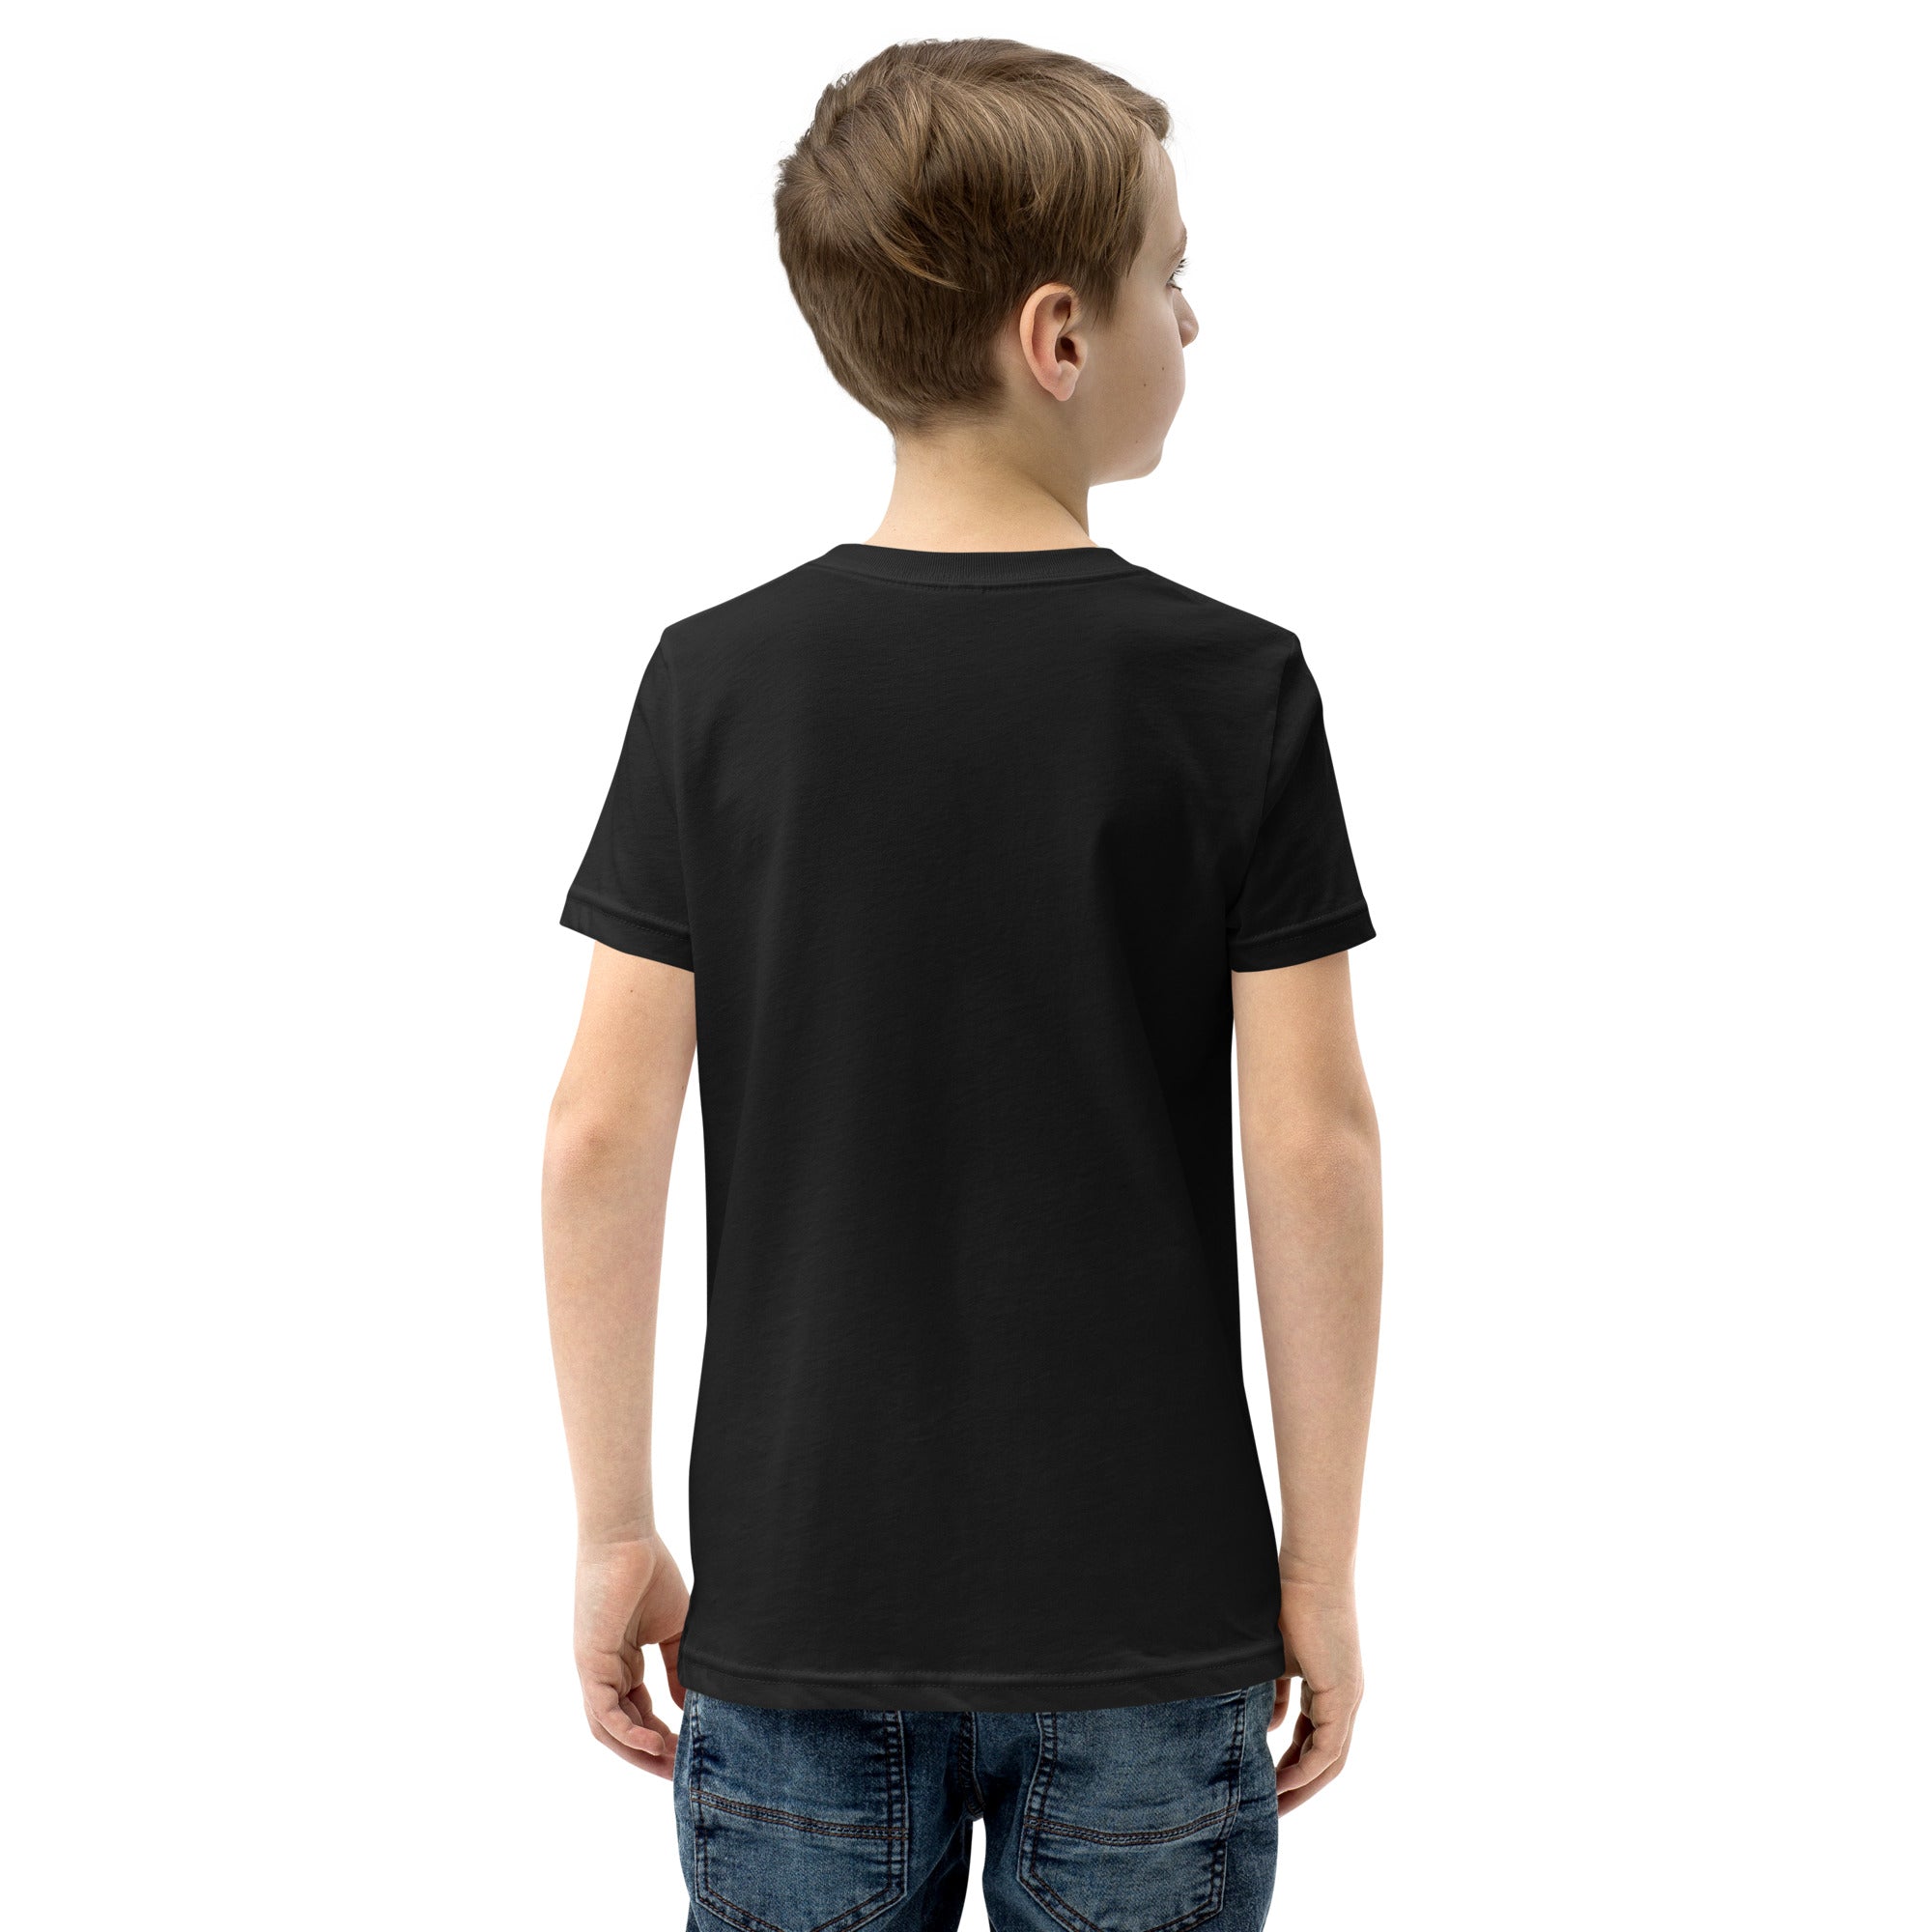 Glen Burnie Logo R/W - Black Youth Short Sleeve T-Shirt